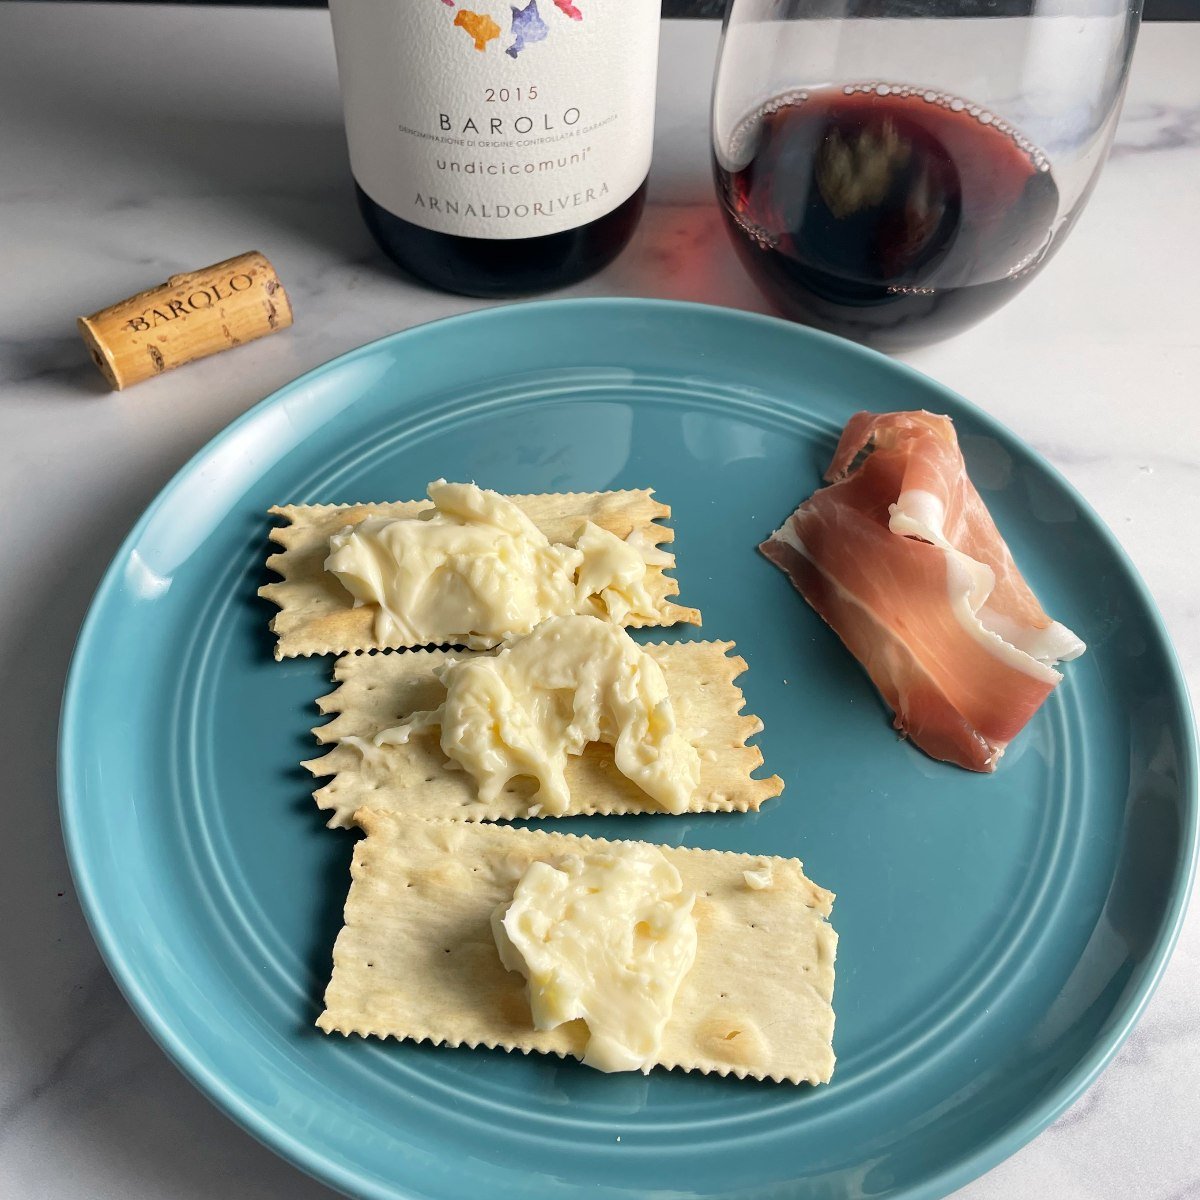 Taleggio cheese spread over crackers, served with prosciutto and a Barolo red wine.